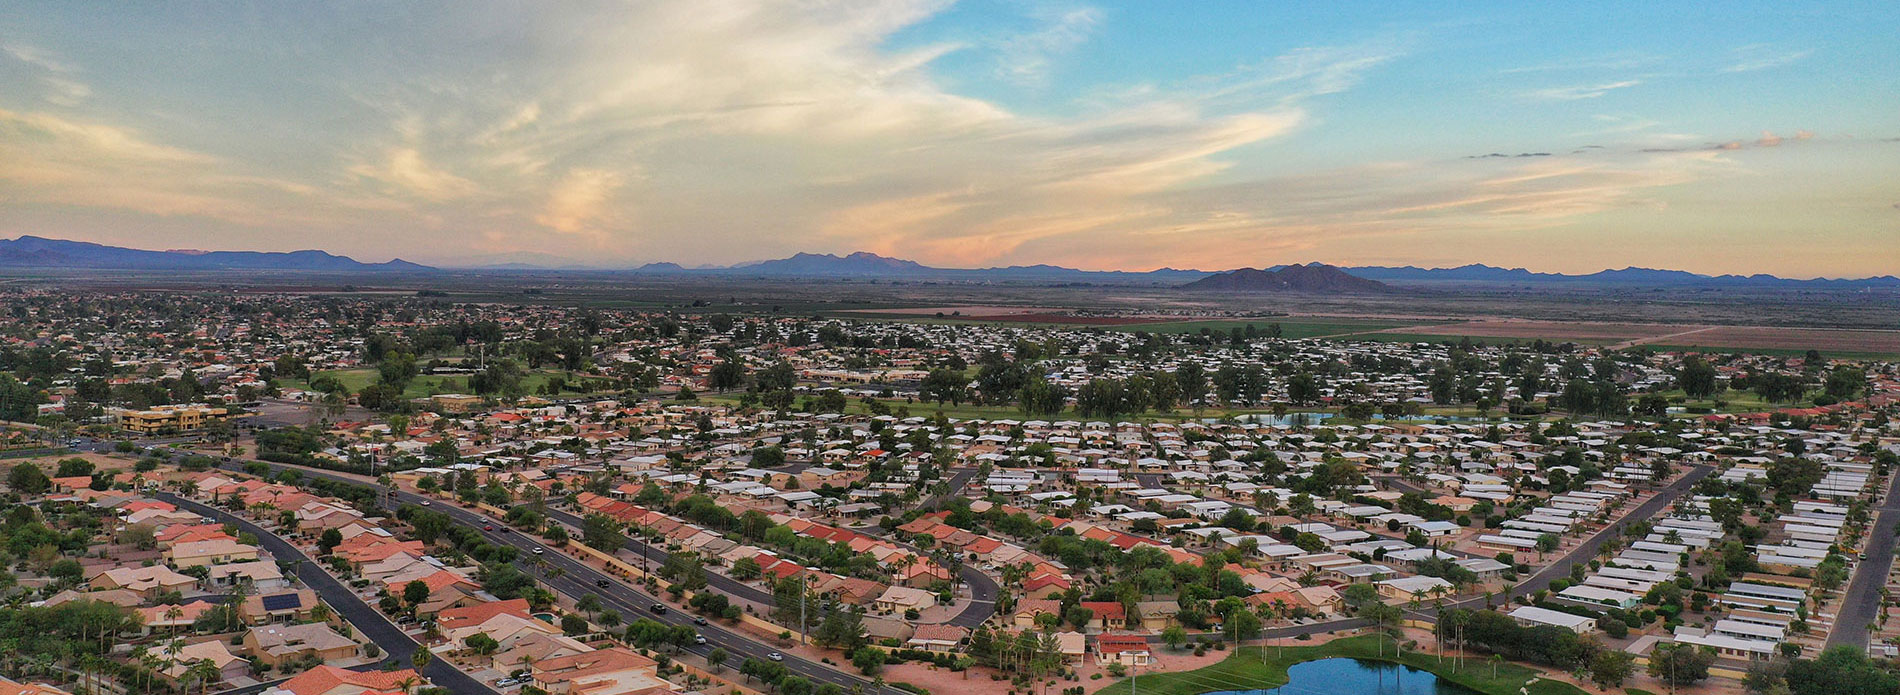 Chandler, AZ aerial view